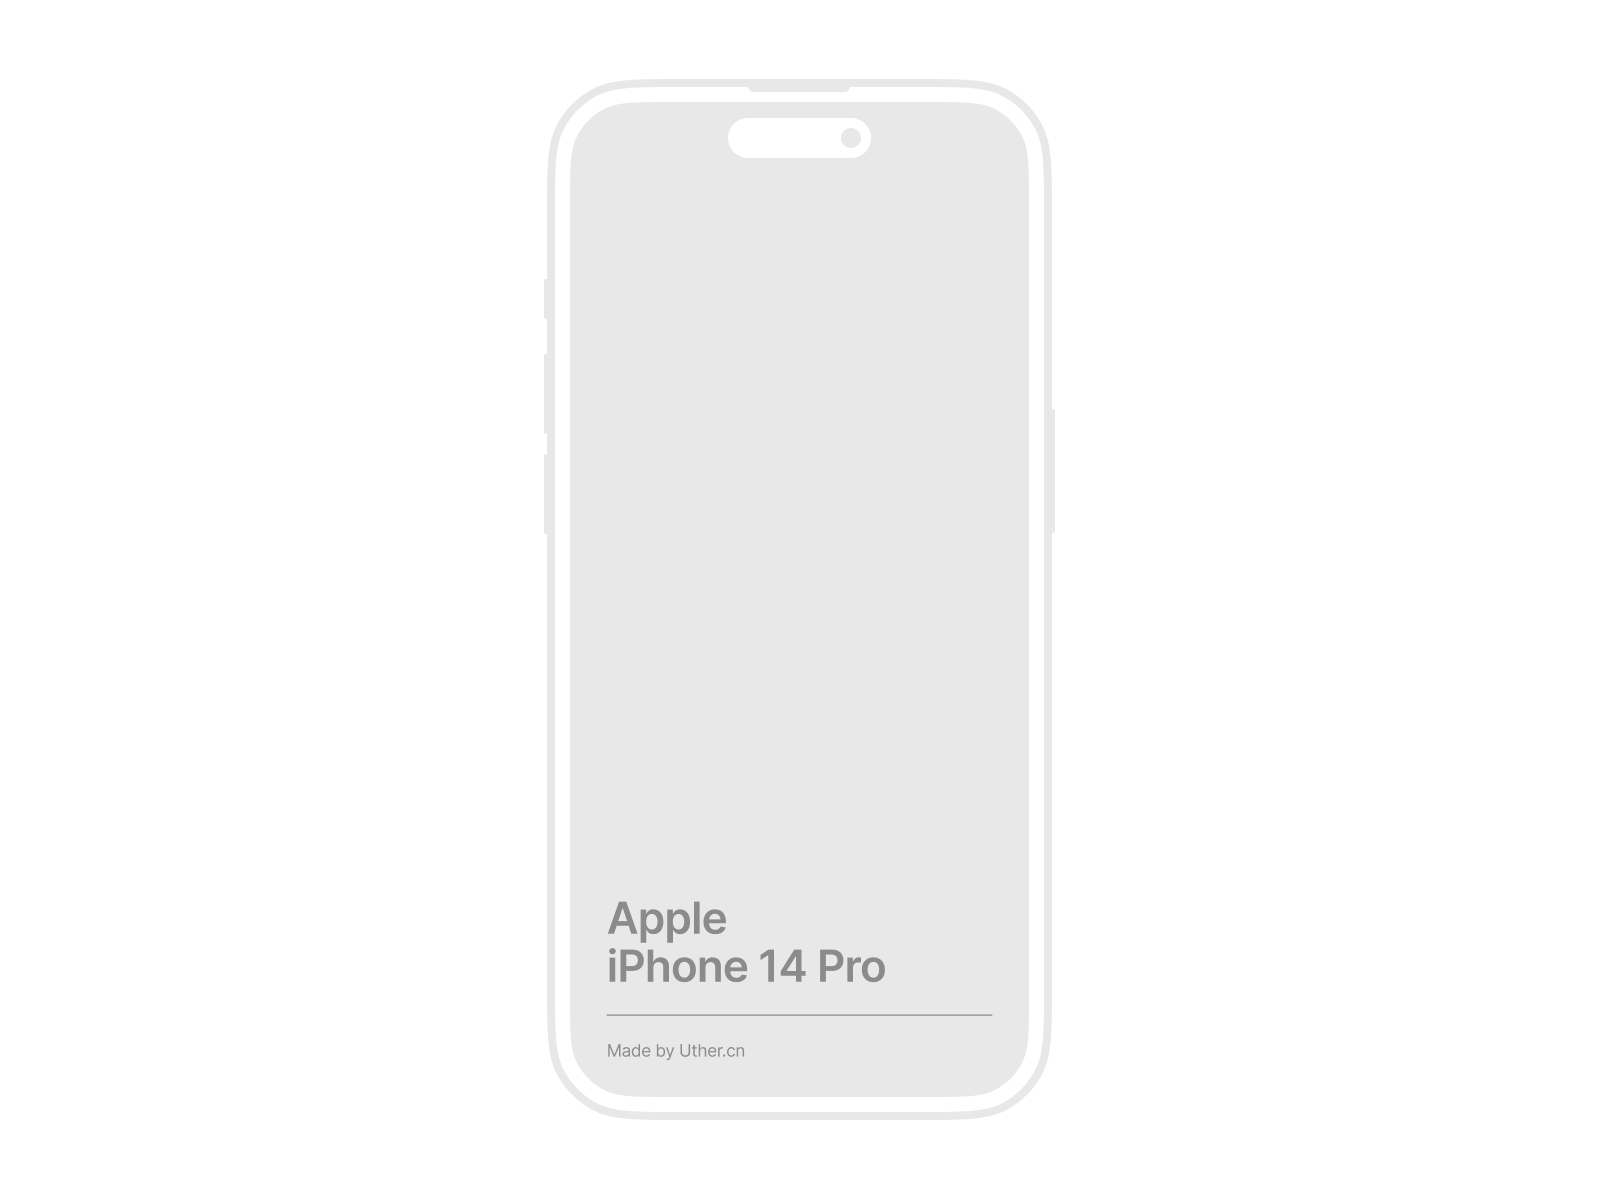 正面iPhone 14 Pro样机模型Mockup .fig素材